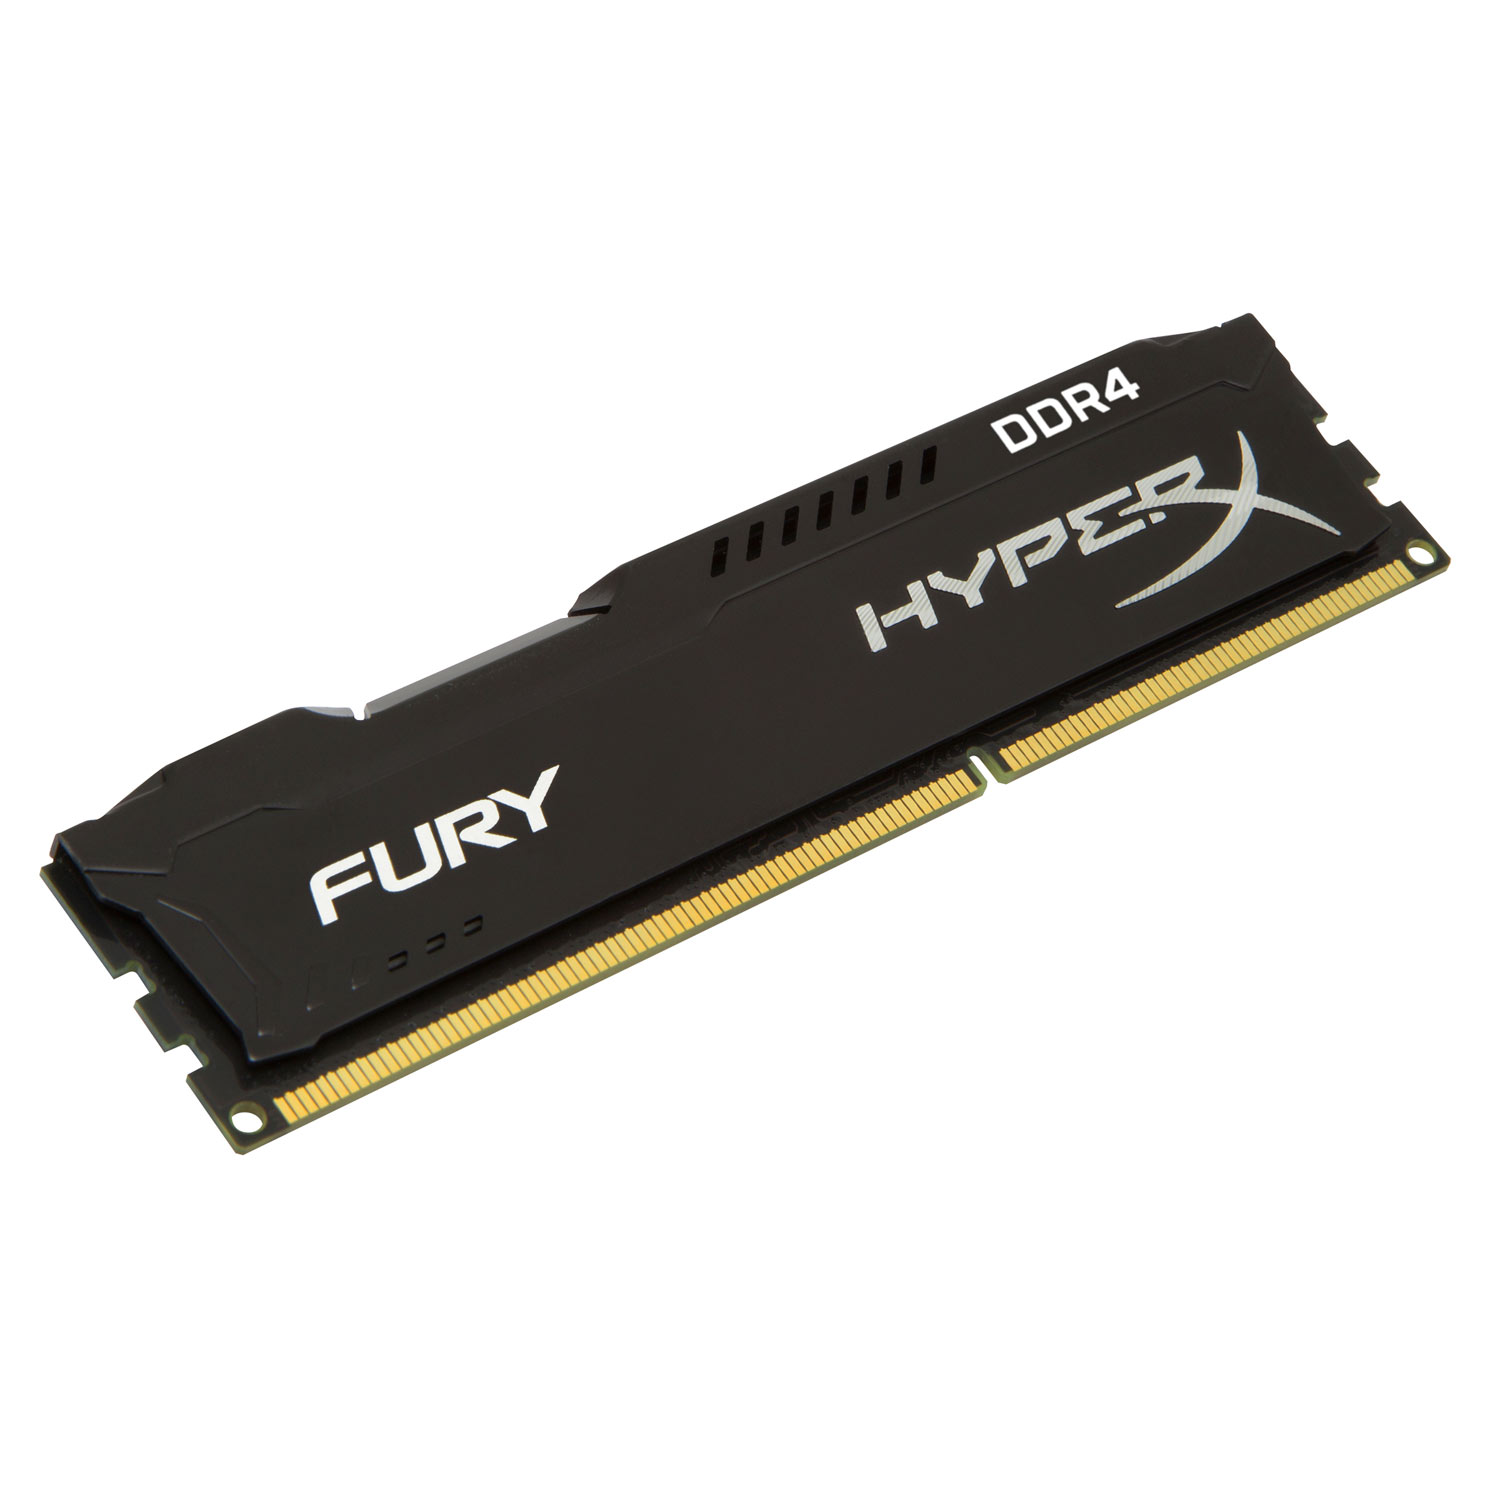 Kingston HyperX Fury 4Go (1x4Go) DDR4 2400MHz - Mémoire PC Kingston sur Cybertek.fr - 0